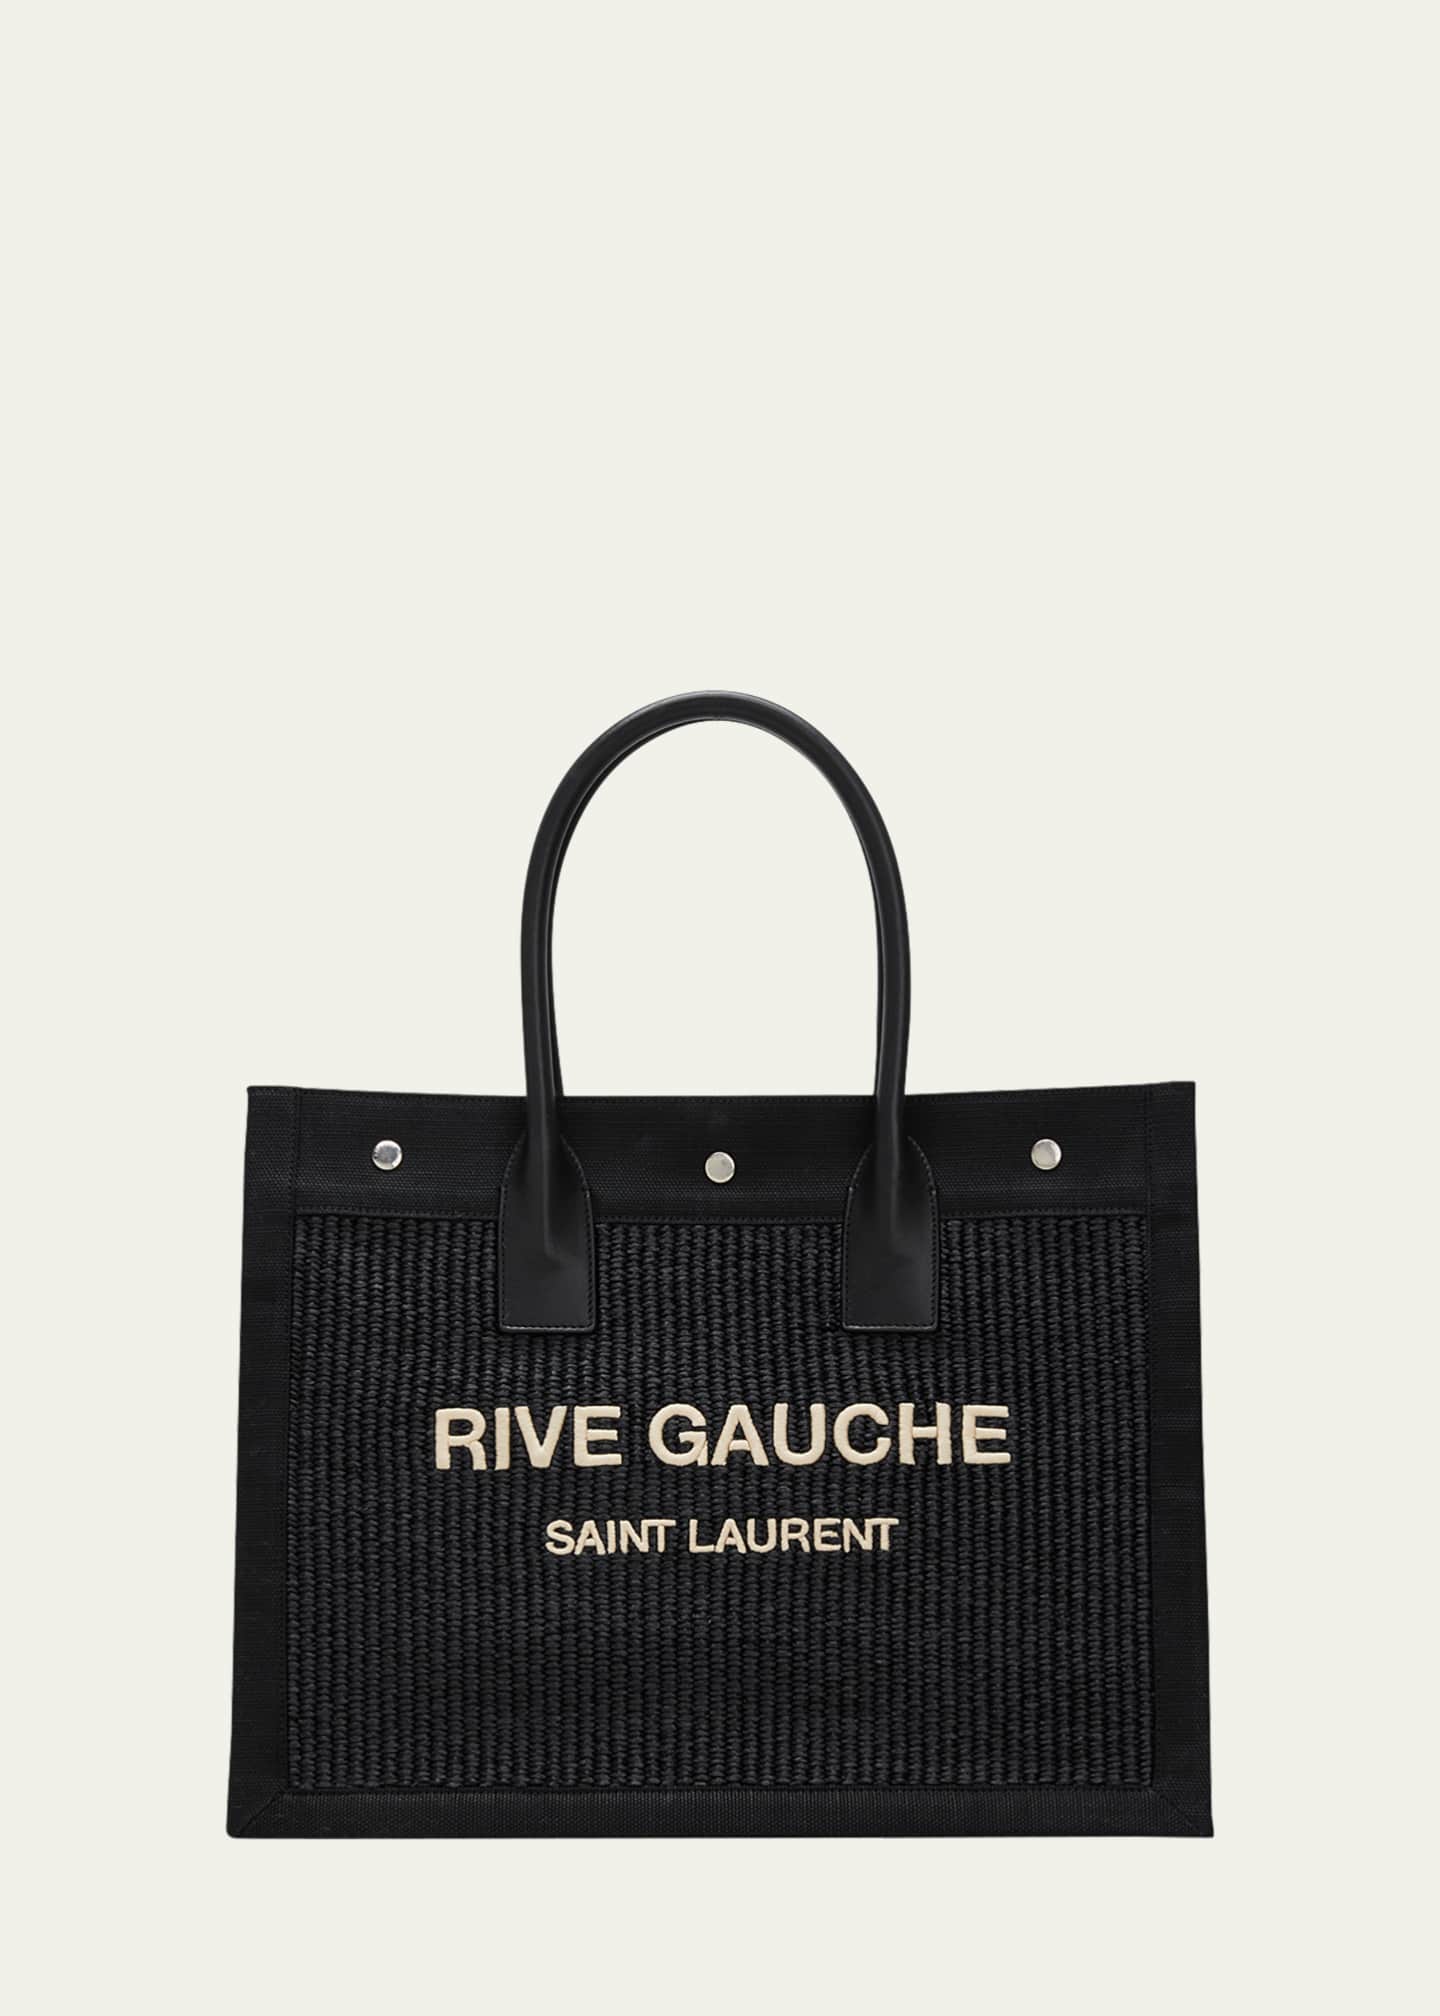 Rive gauche raffia tote bag - Saint Laurent - Women